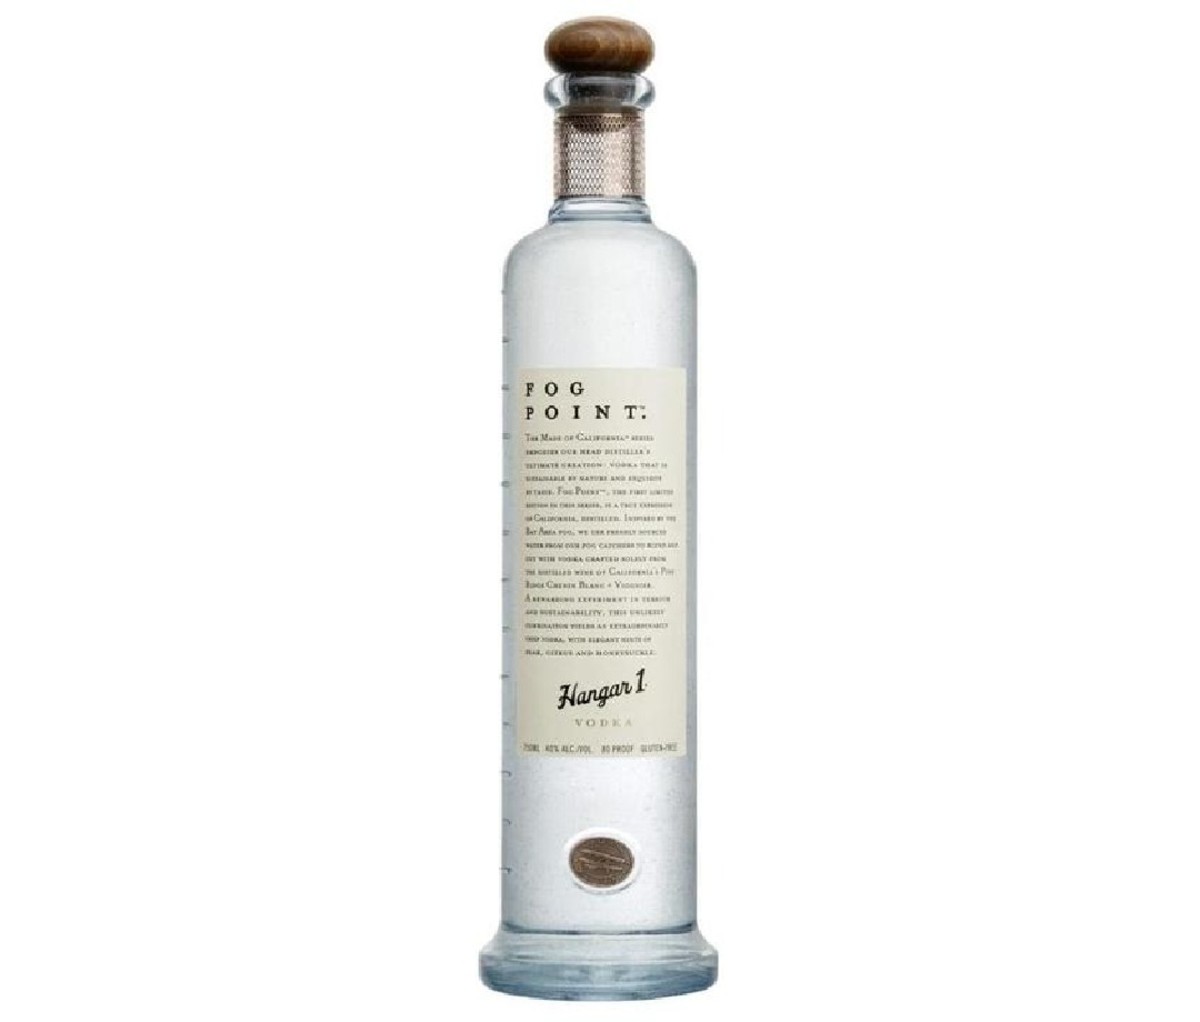 A bottle of Hangar 1 Fog Point Vodka.